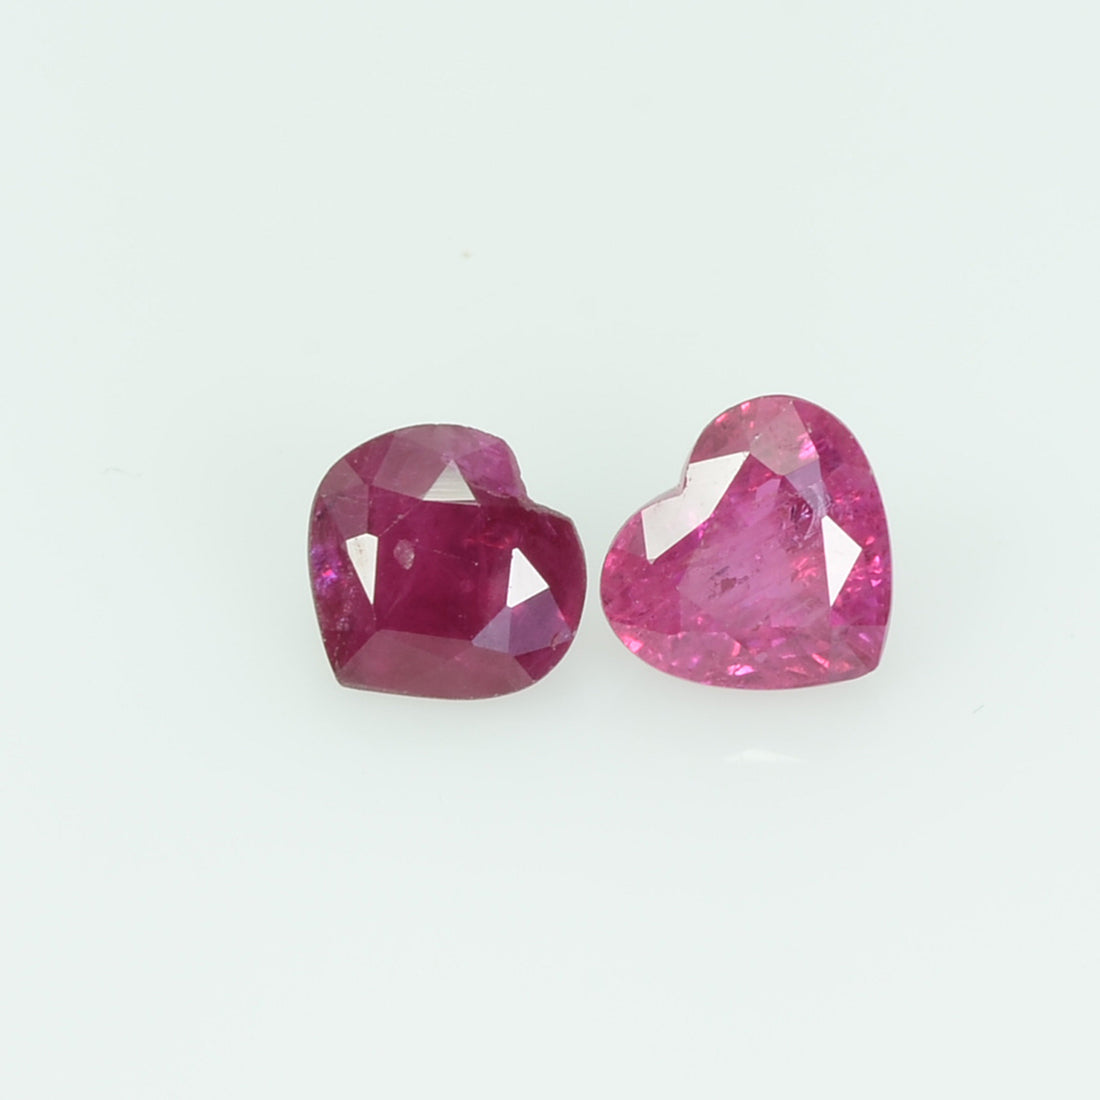 5 Mm Natural Ruby Loose Gemstone Heart Cut - Thai Gems Export Ltd.